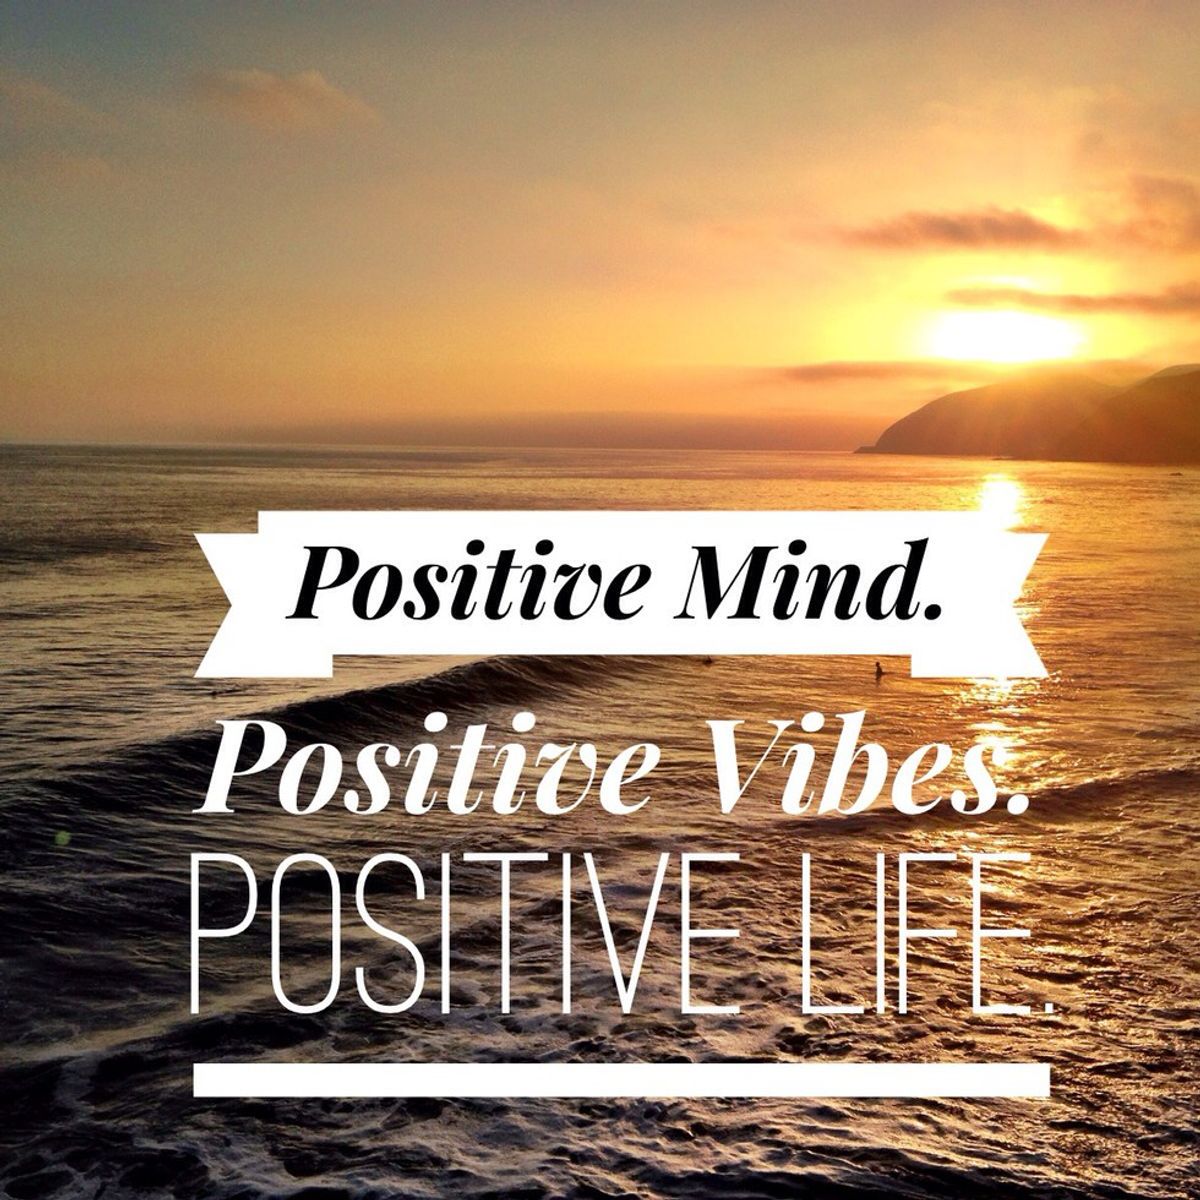 Positive Mind, Positive Life